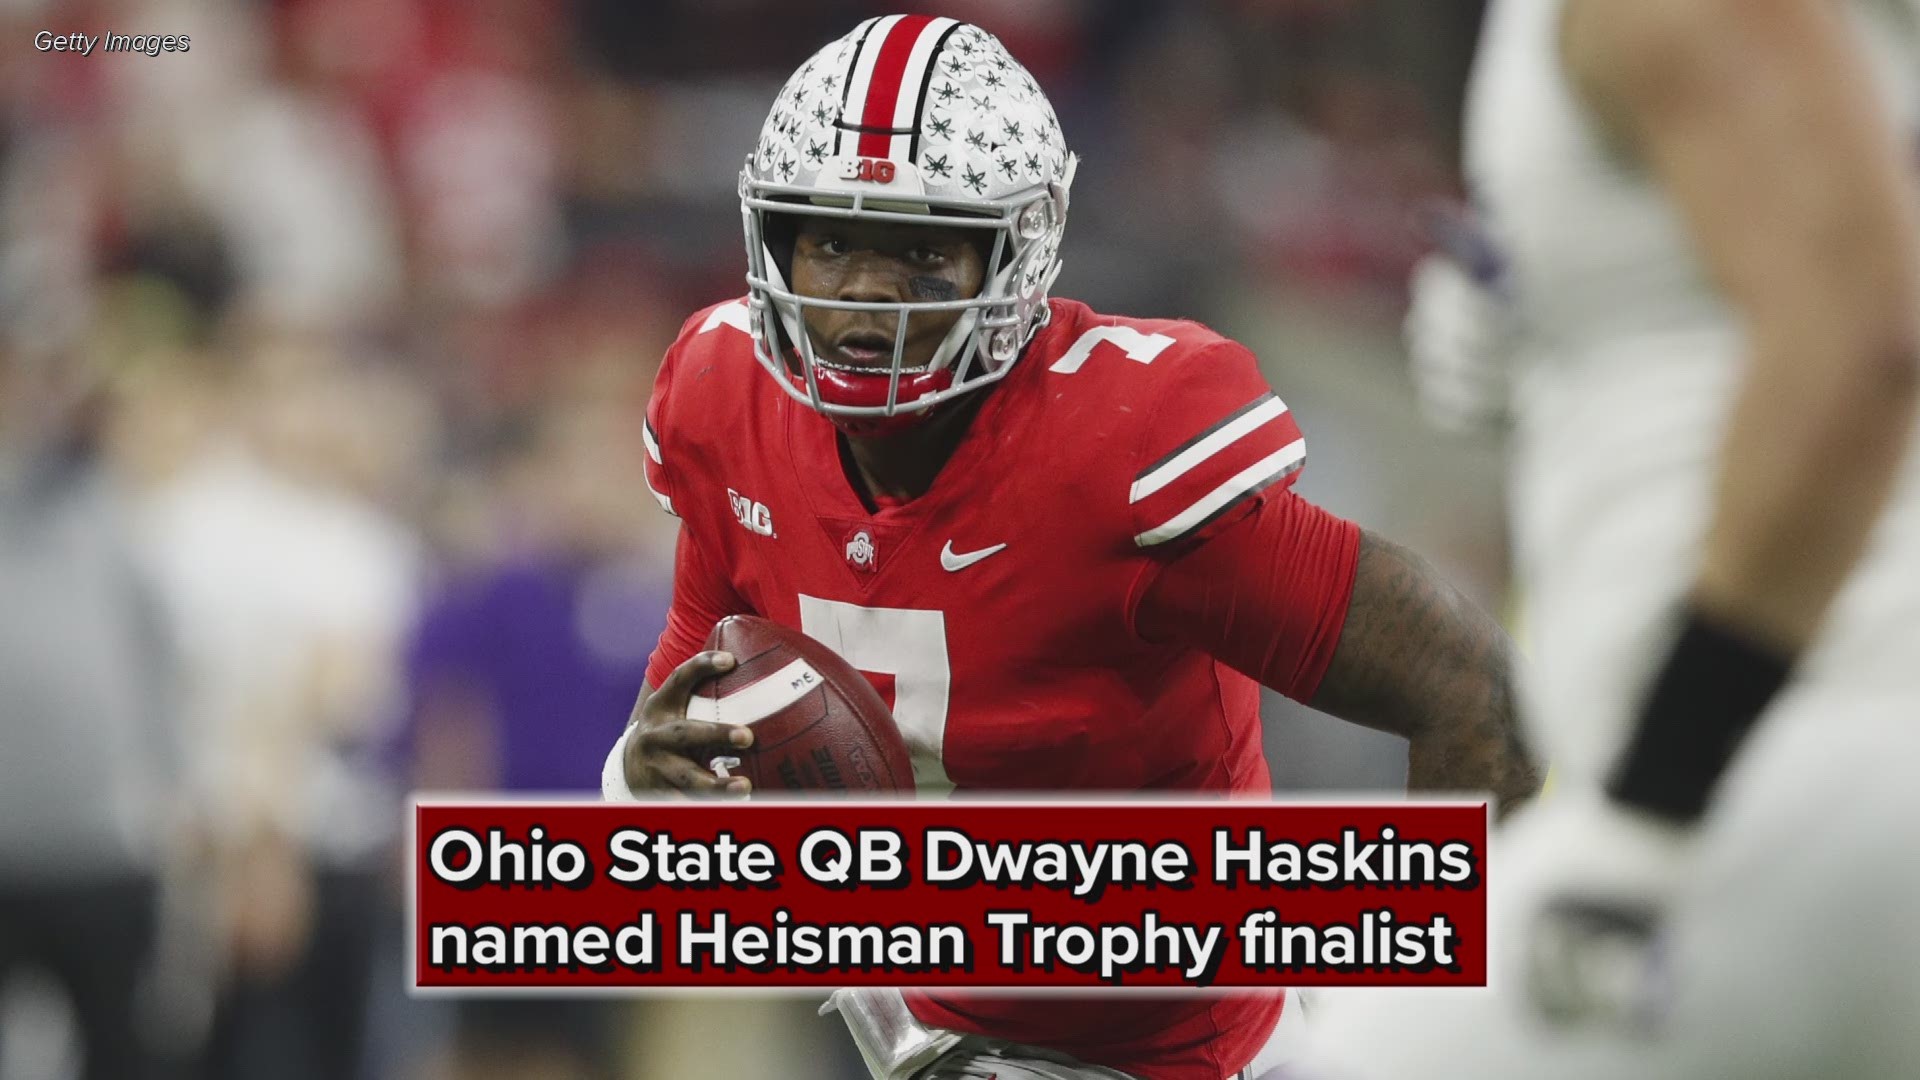 Ohio State QB Dwayne Haskins named Heisman Trophy finalist